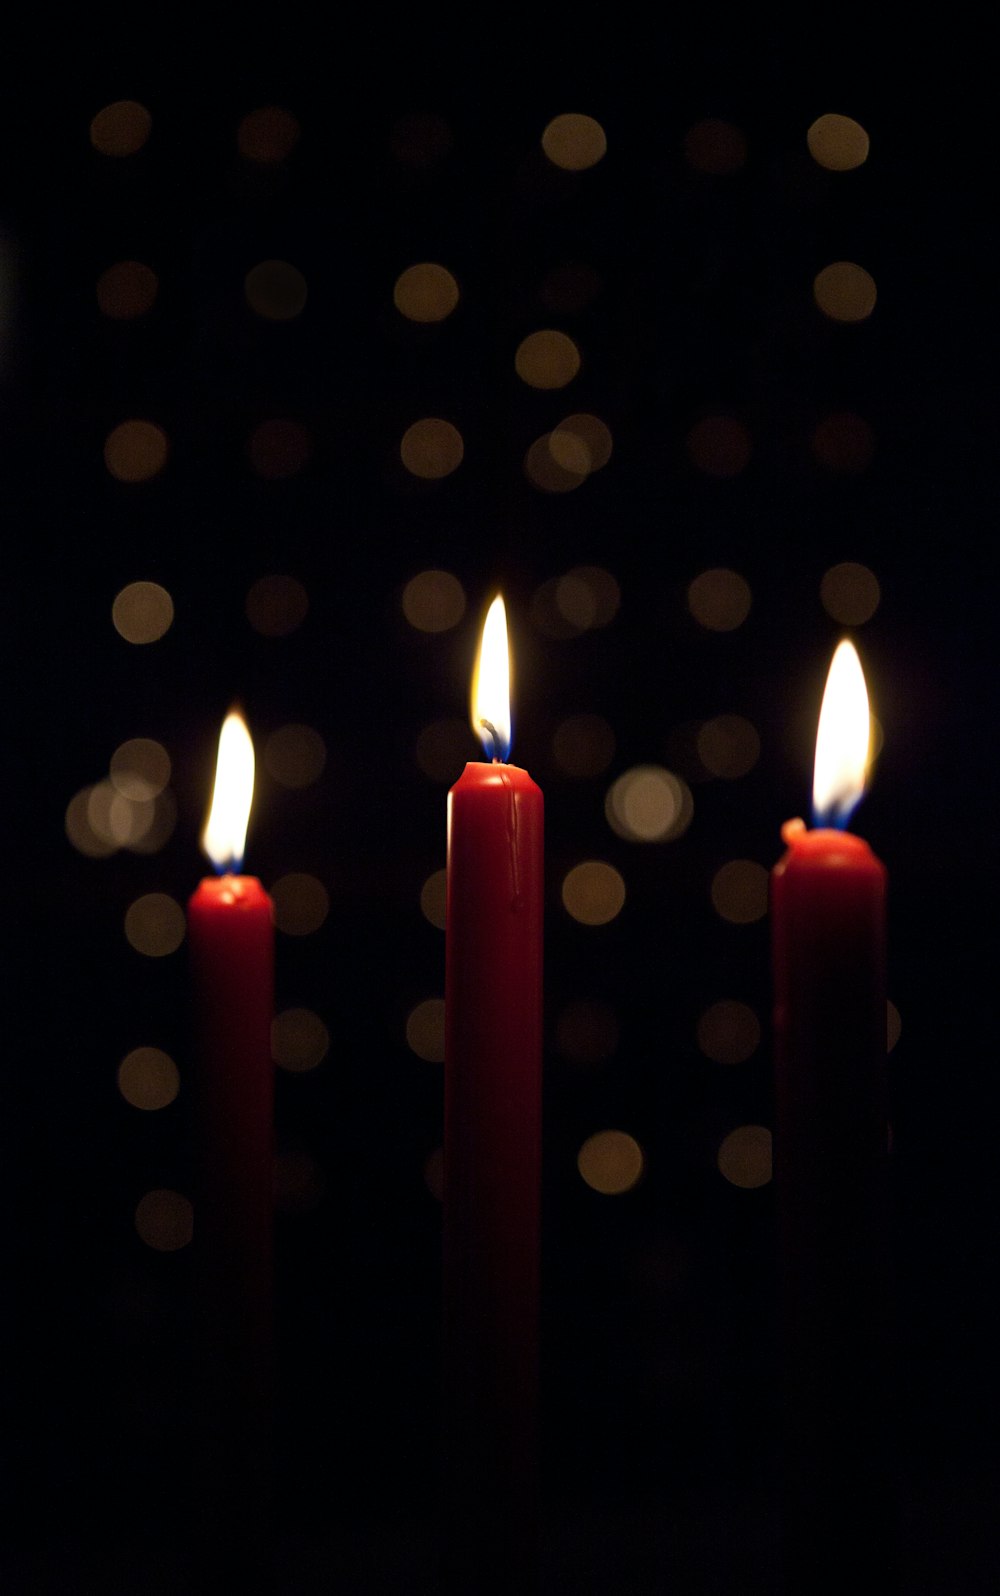 three lighted red candlesticks